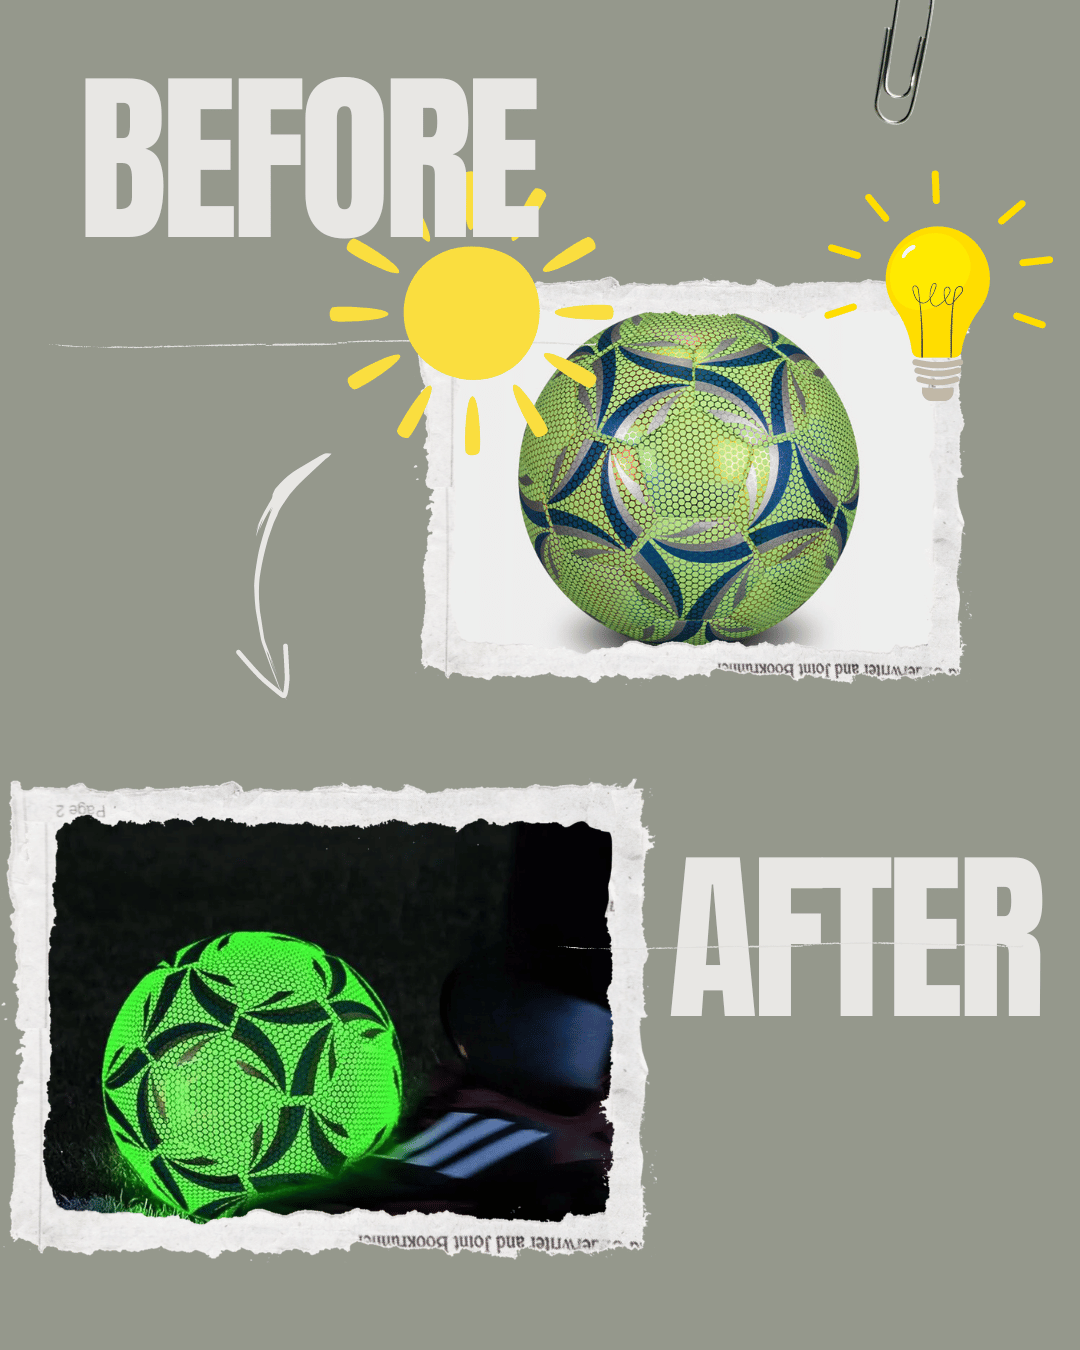 Lumi™ -Glowing Soccer ball